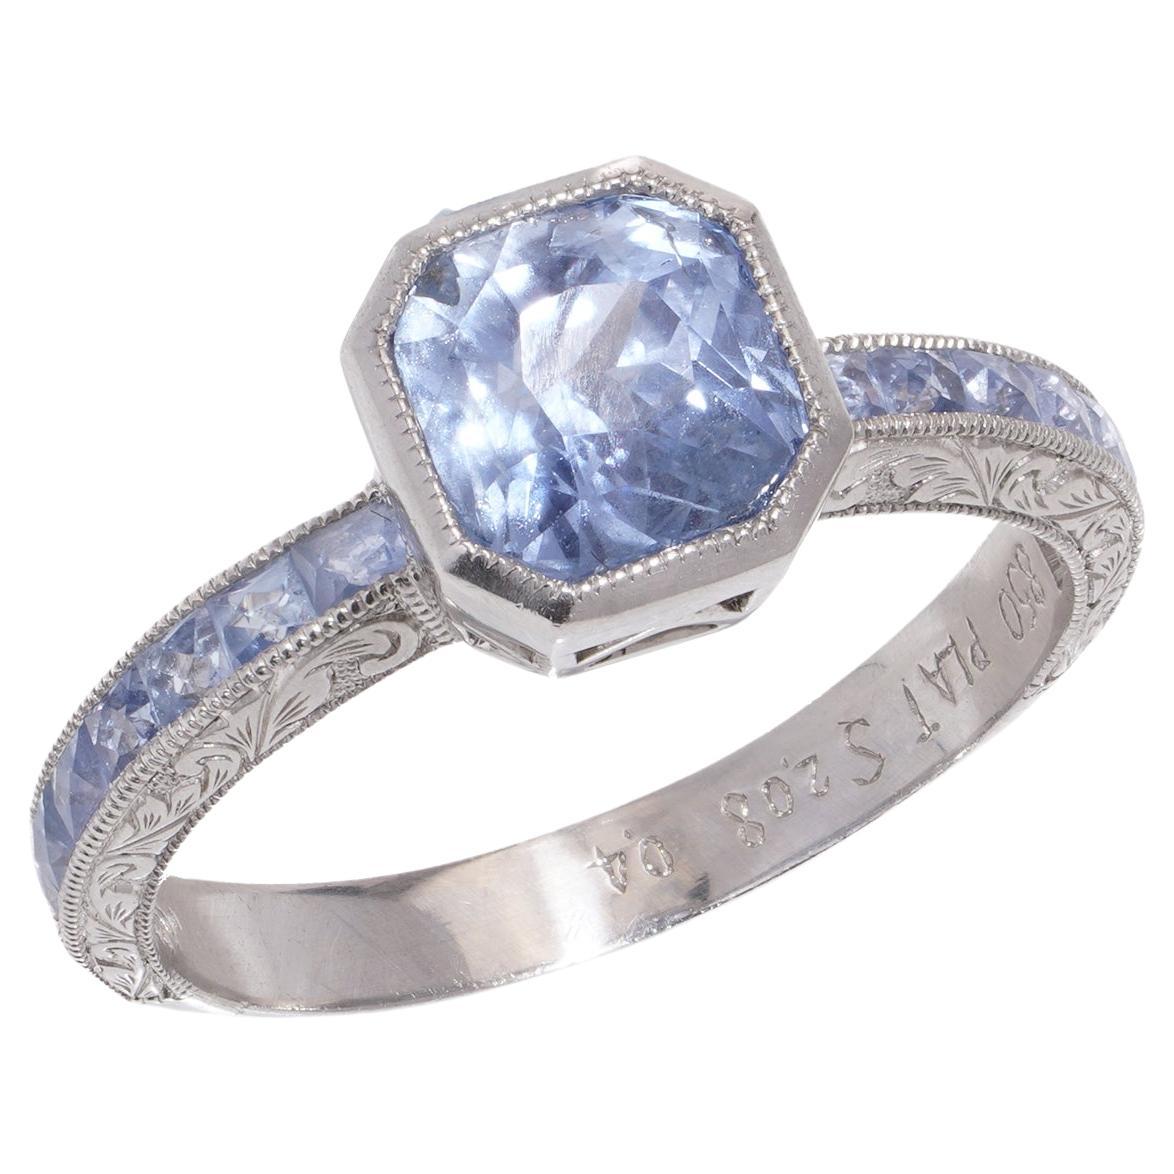 JoAq 850 Platinum Art Deco-inspired Sapphire ring